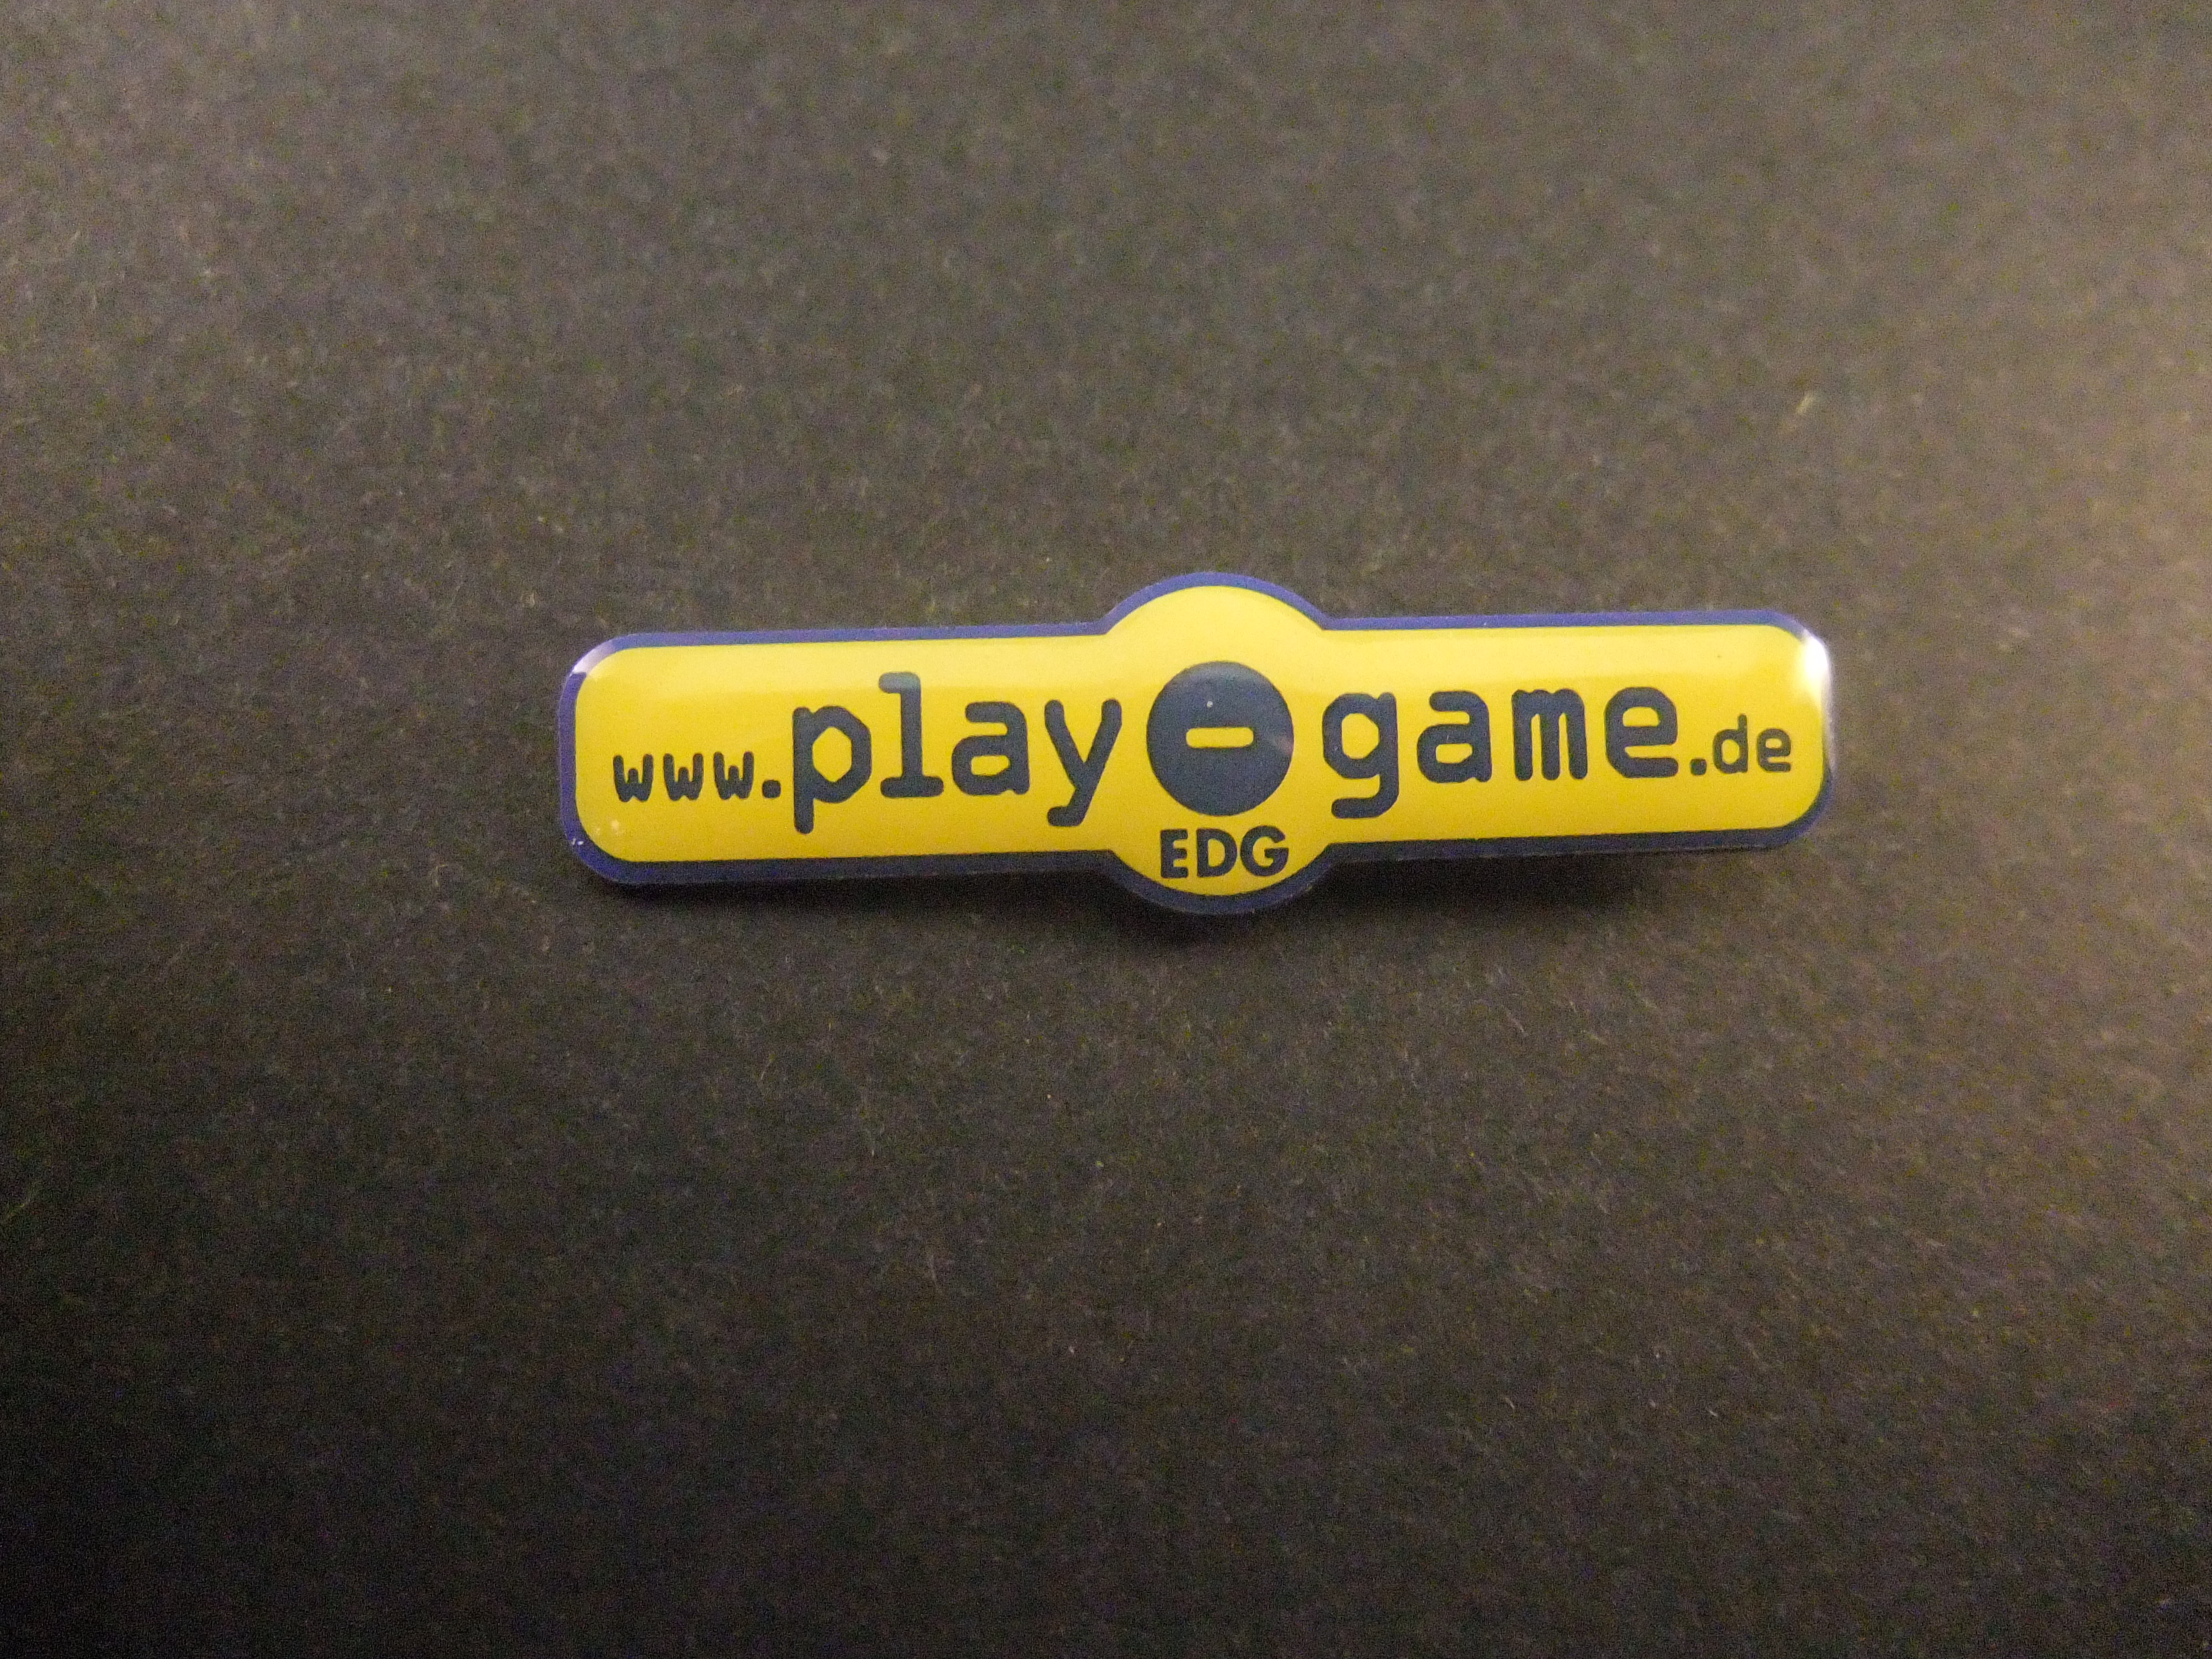 WWW.Playgame-.de EDG